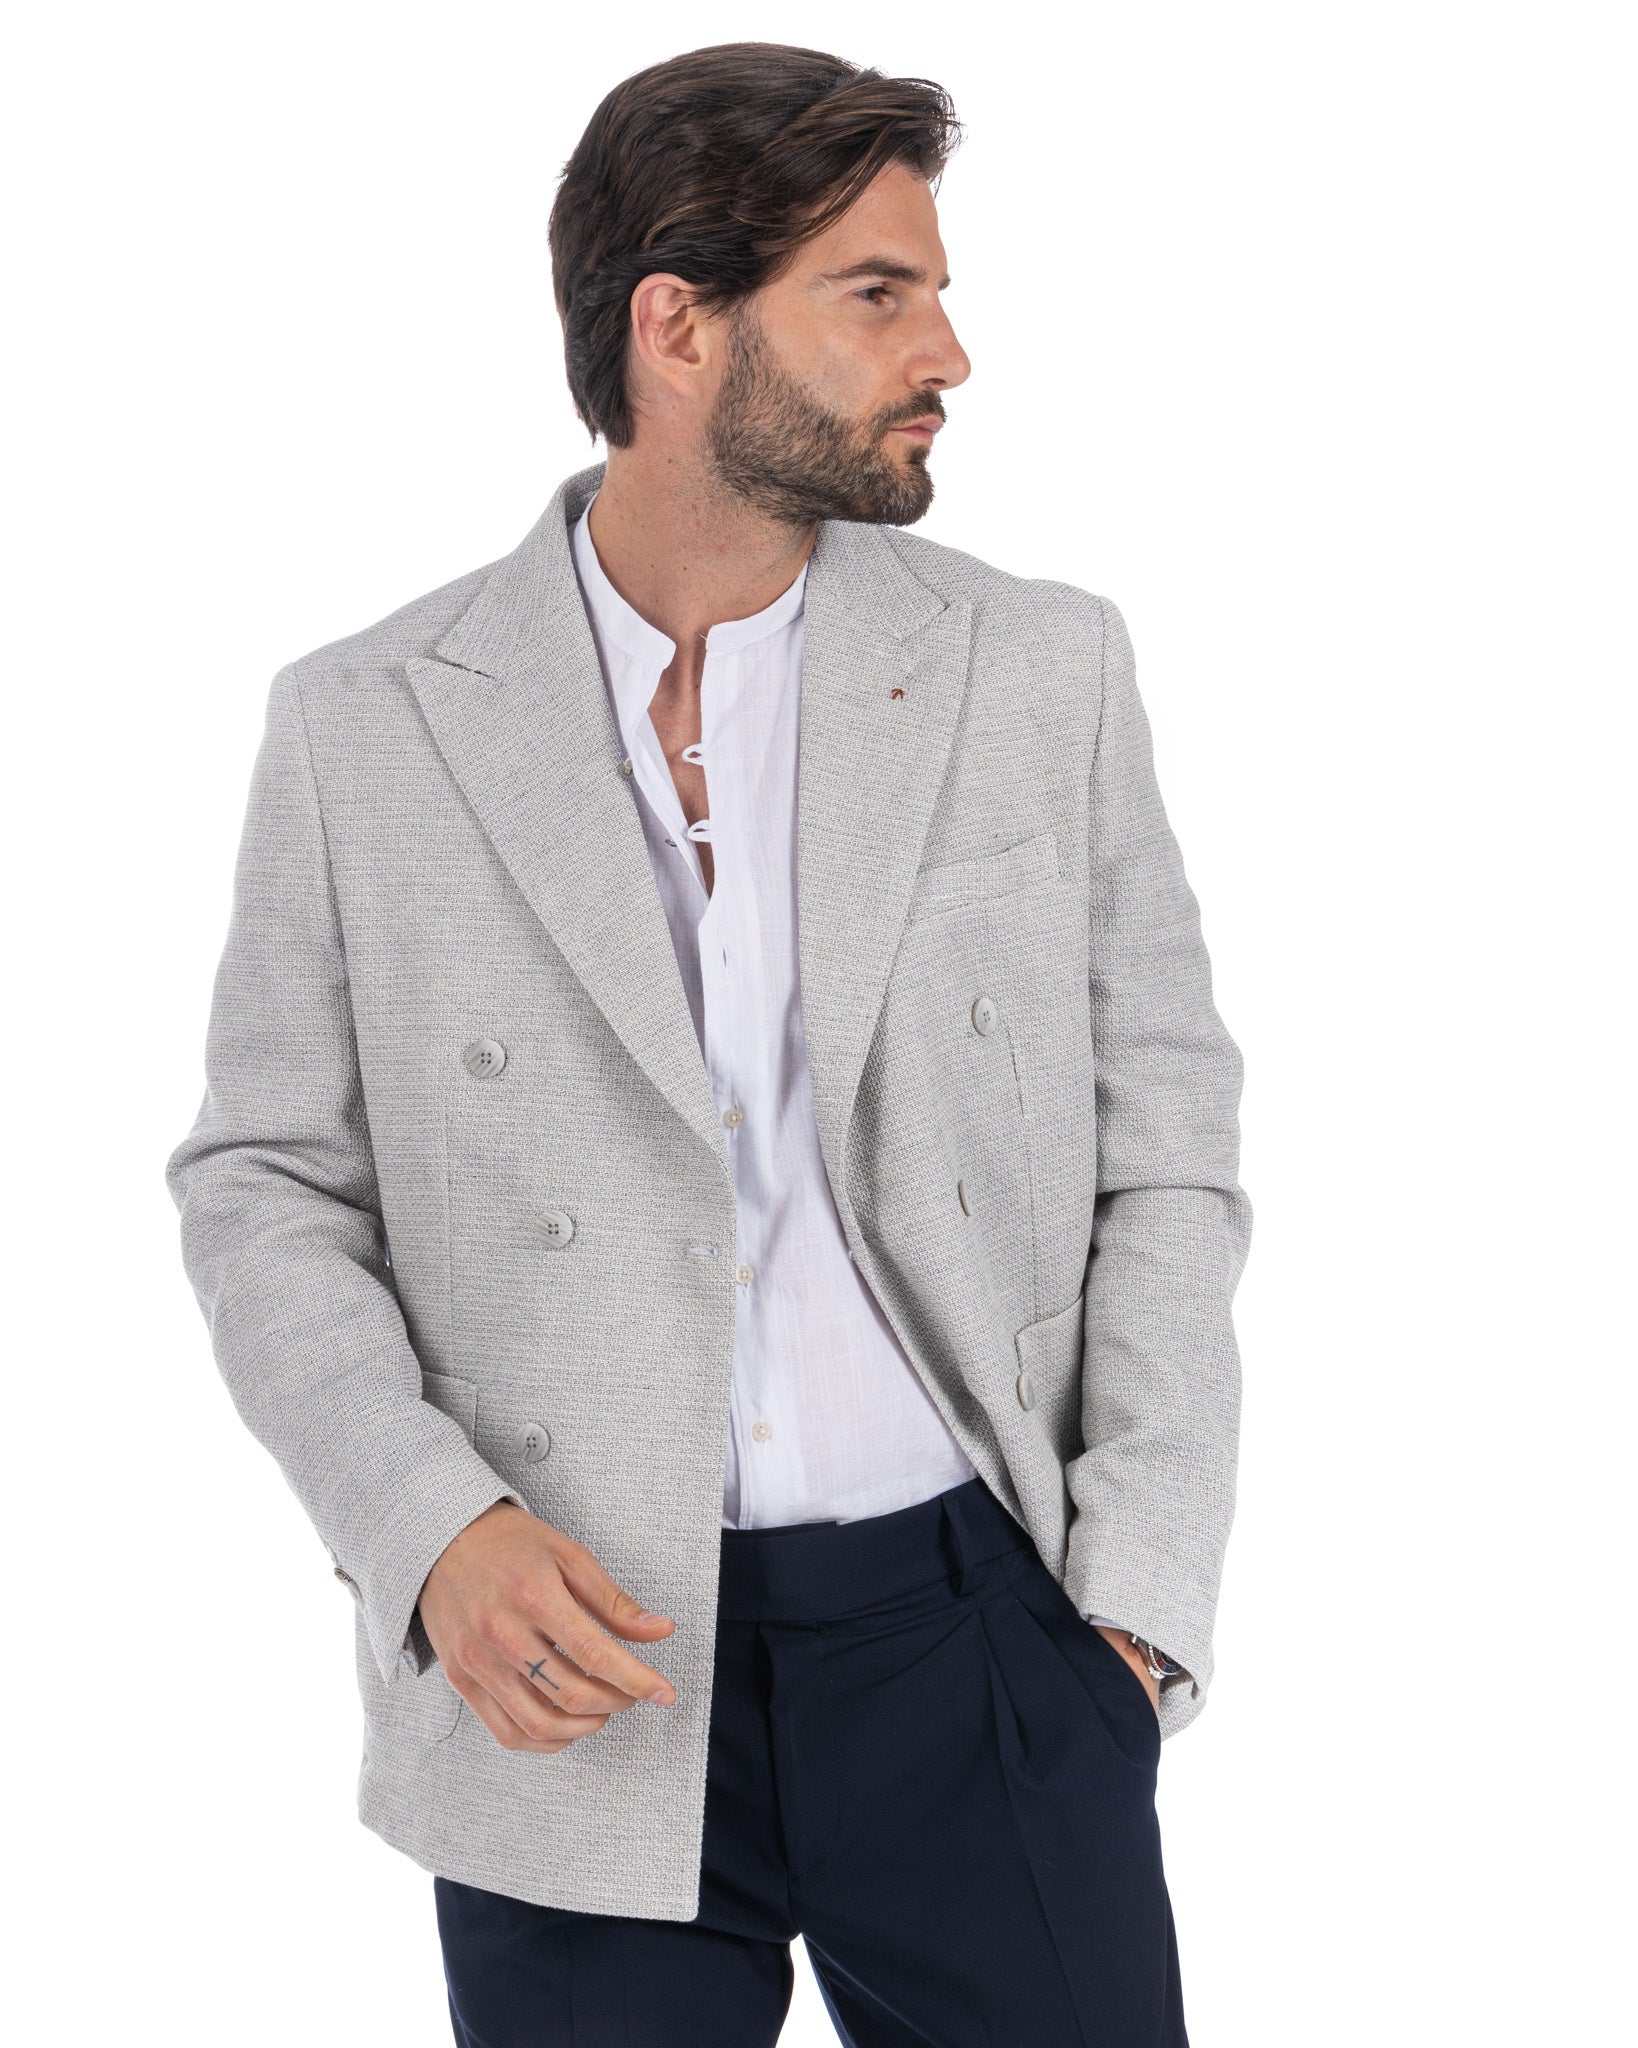 Leuca - gray double-breasted jacket